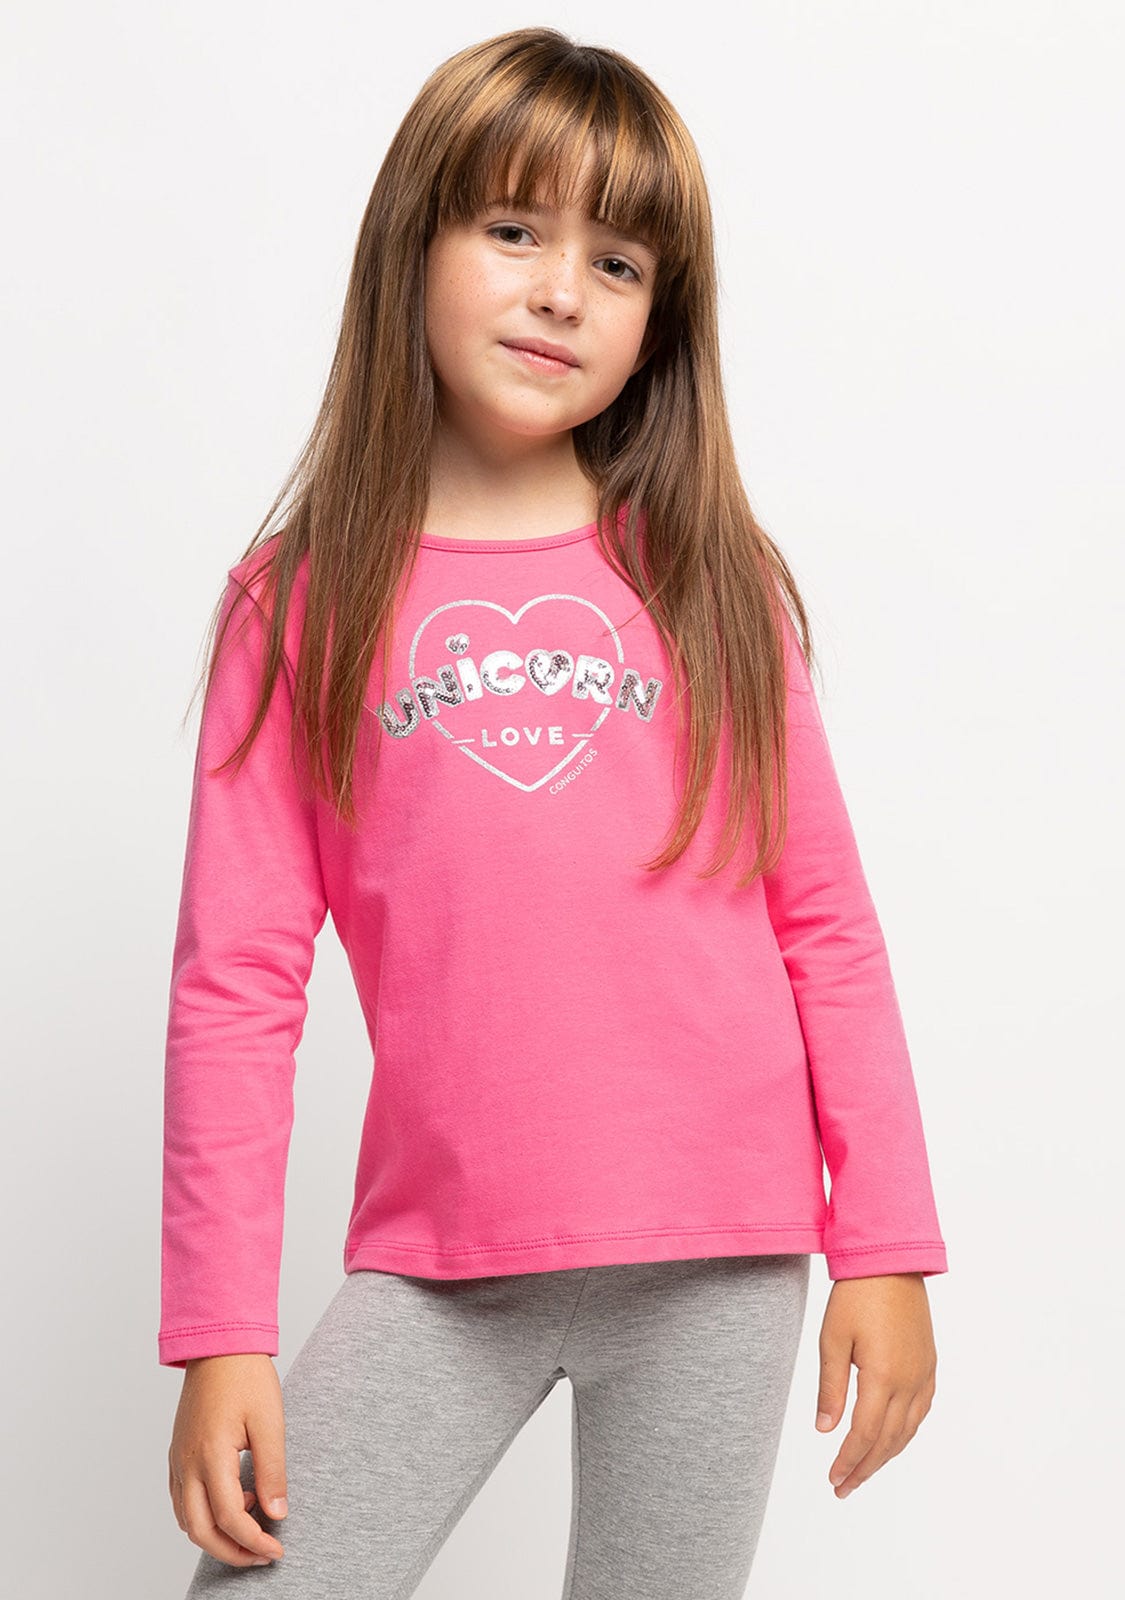 CONGUITOS TEXTIL Clothing Girl's Unicorn Love Fuchsia Shirt